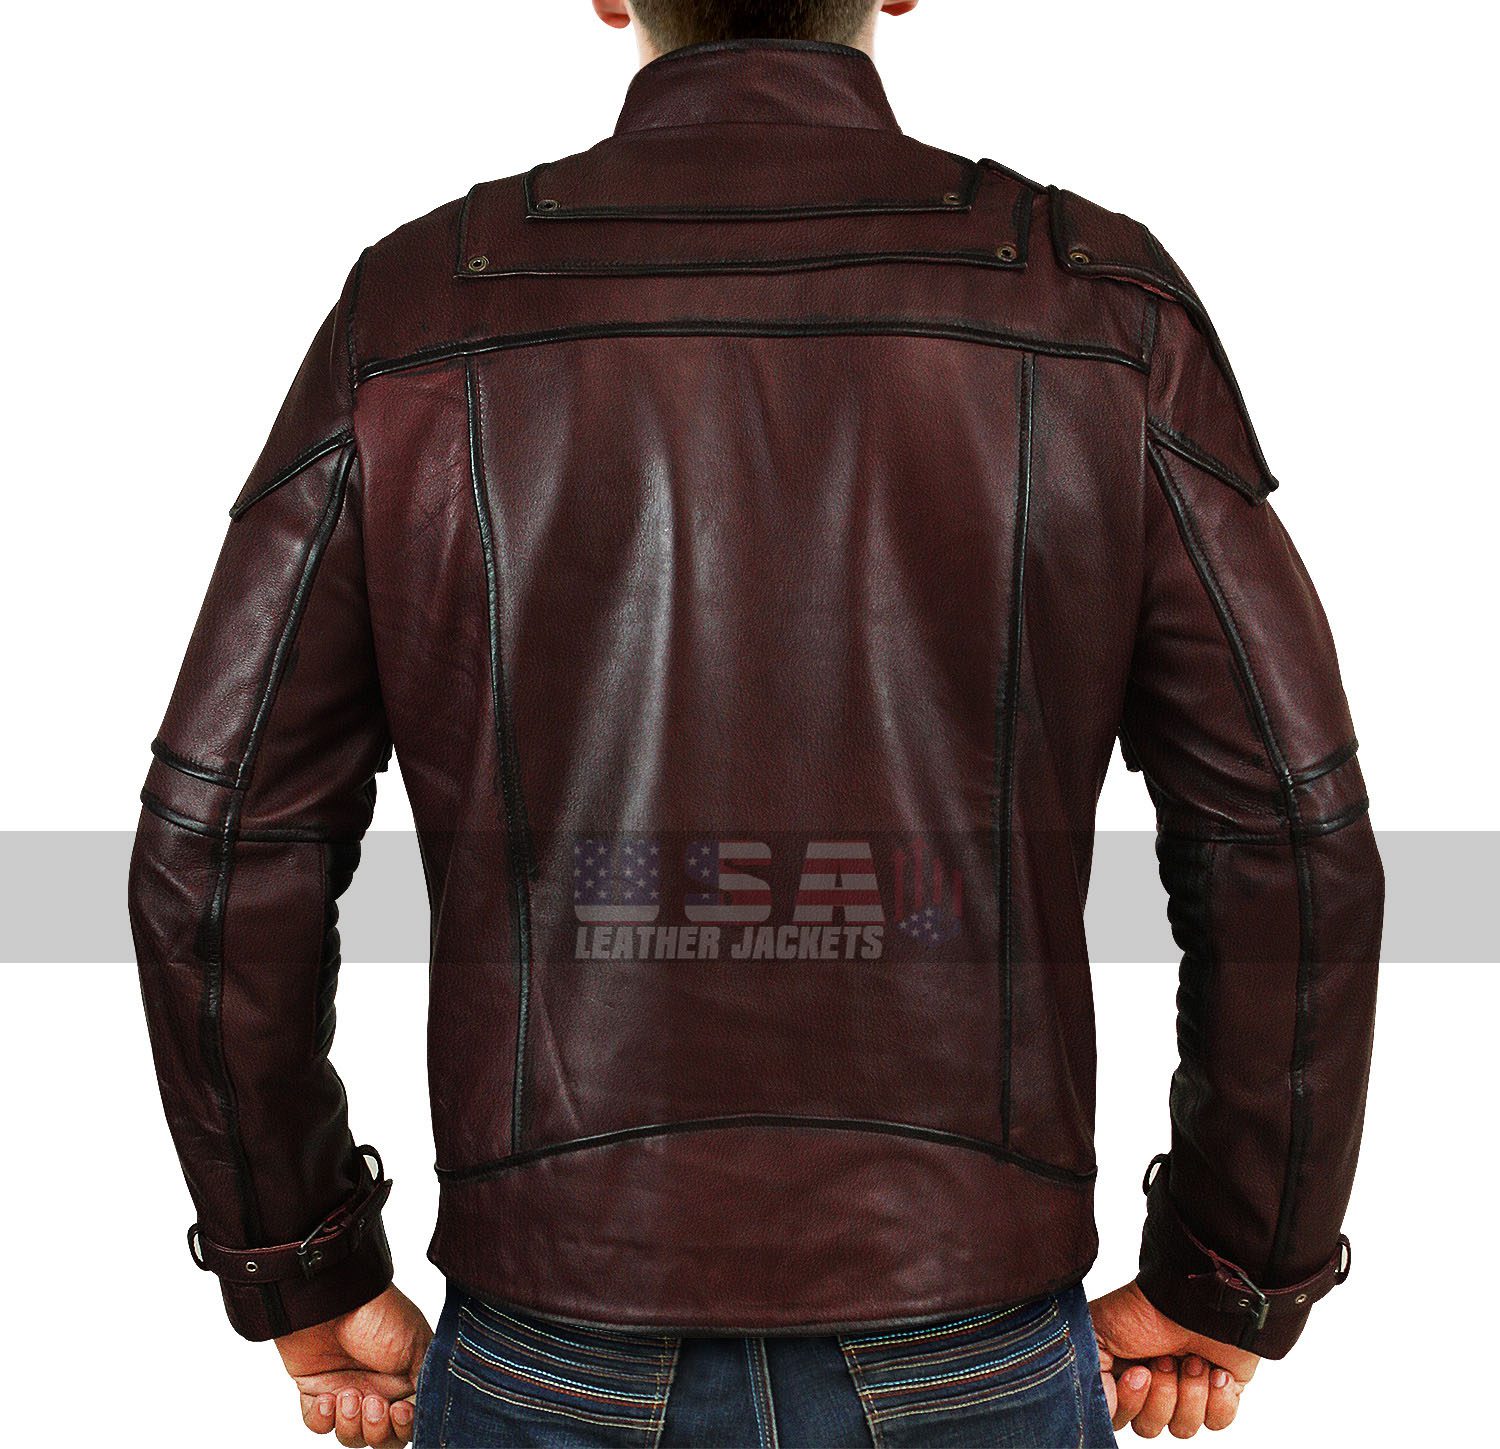 Avengers Infinity War Chris Pratt (Star Lord) Leather Costume Jacket